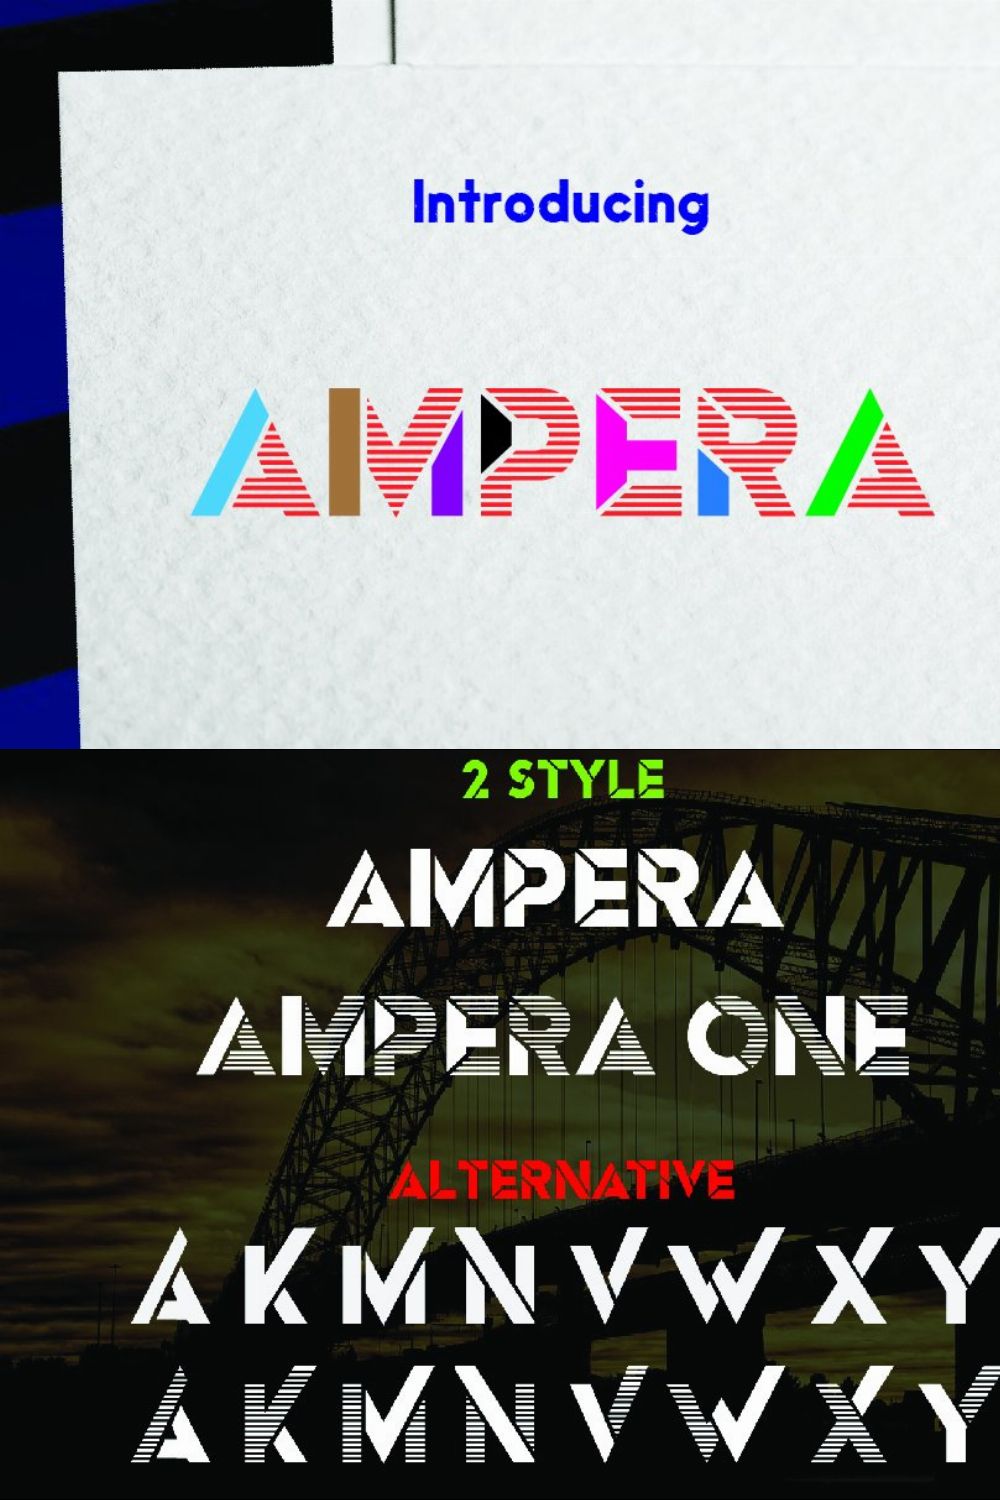 AMPERA pinterest preview image.